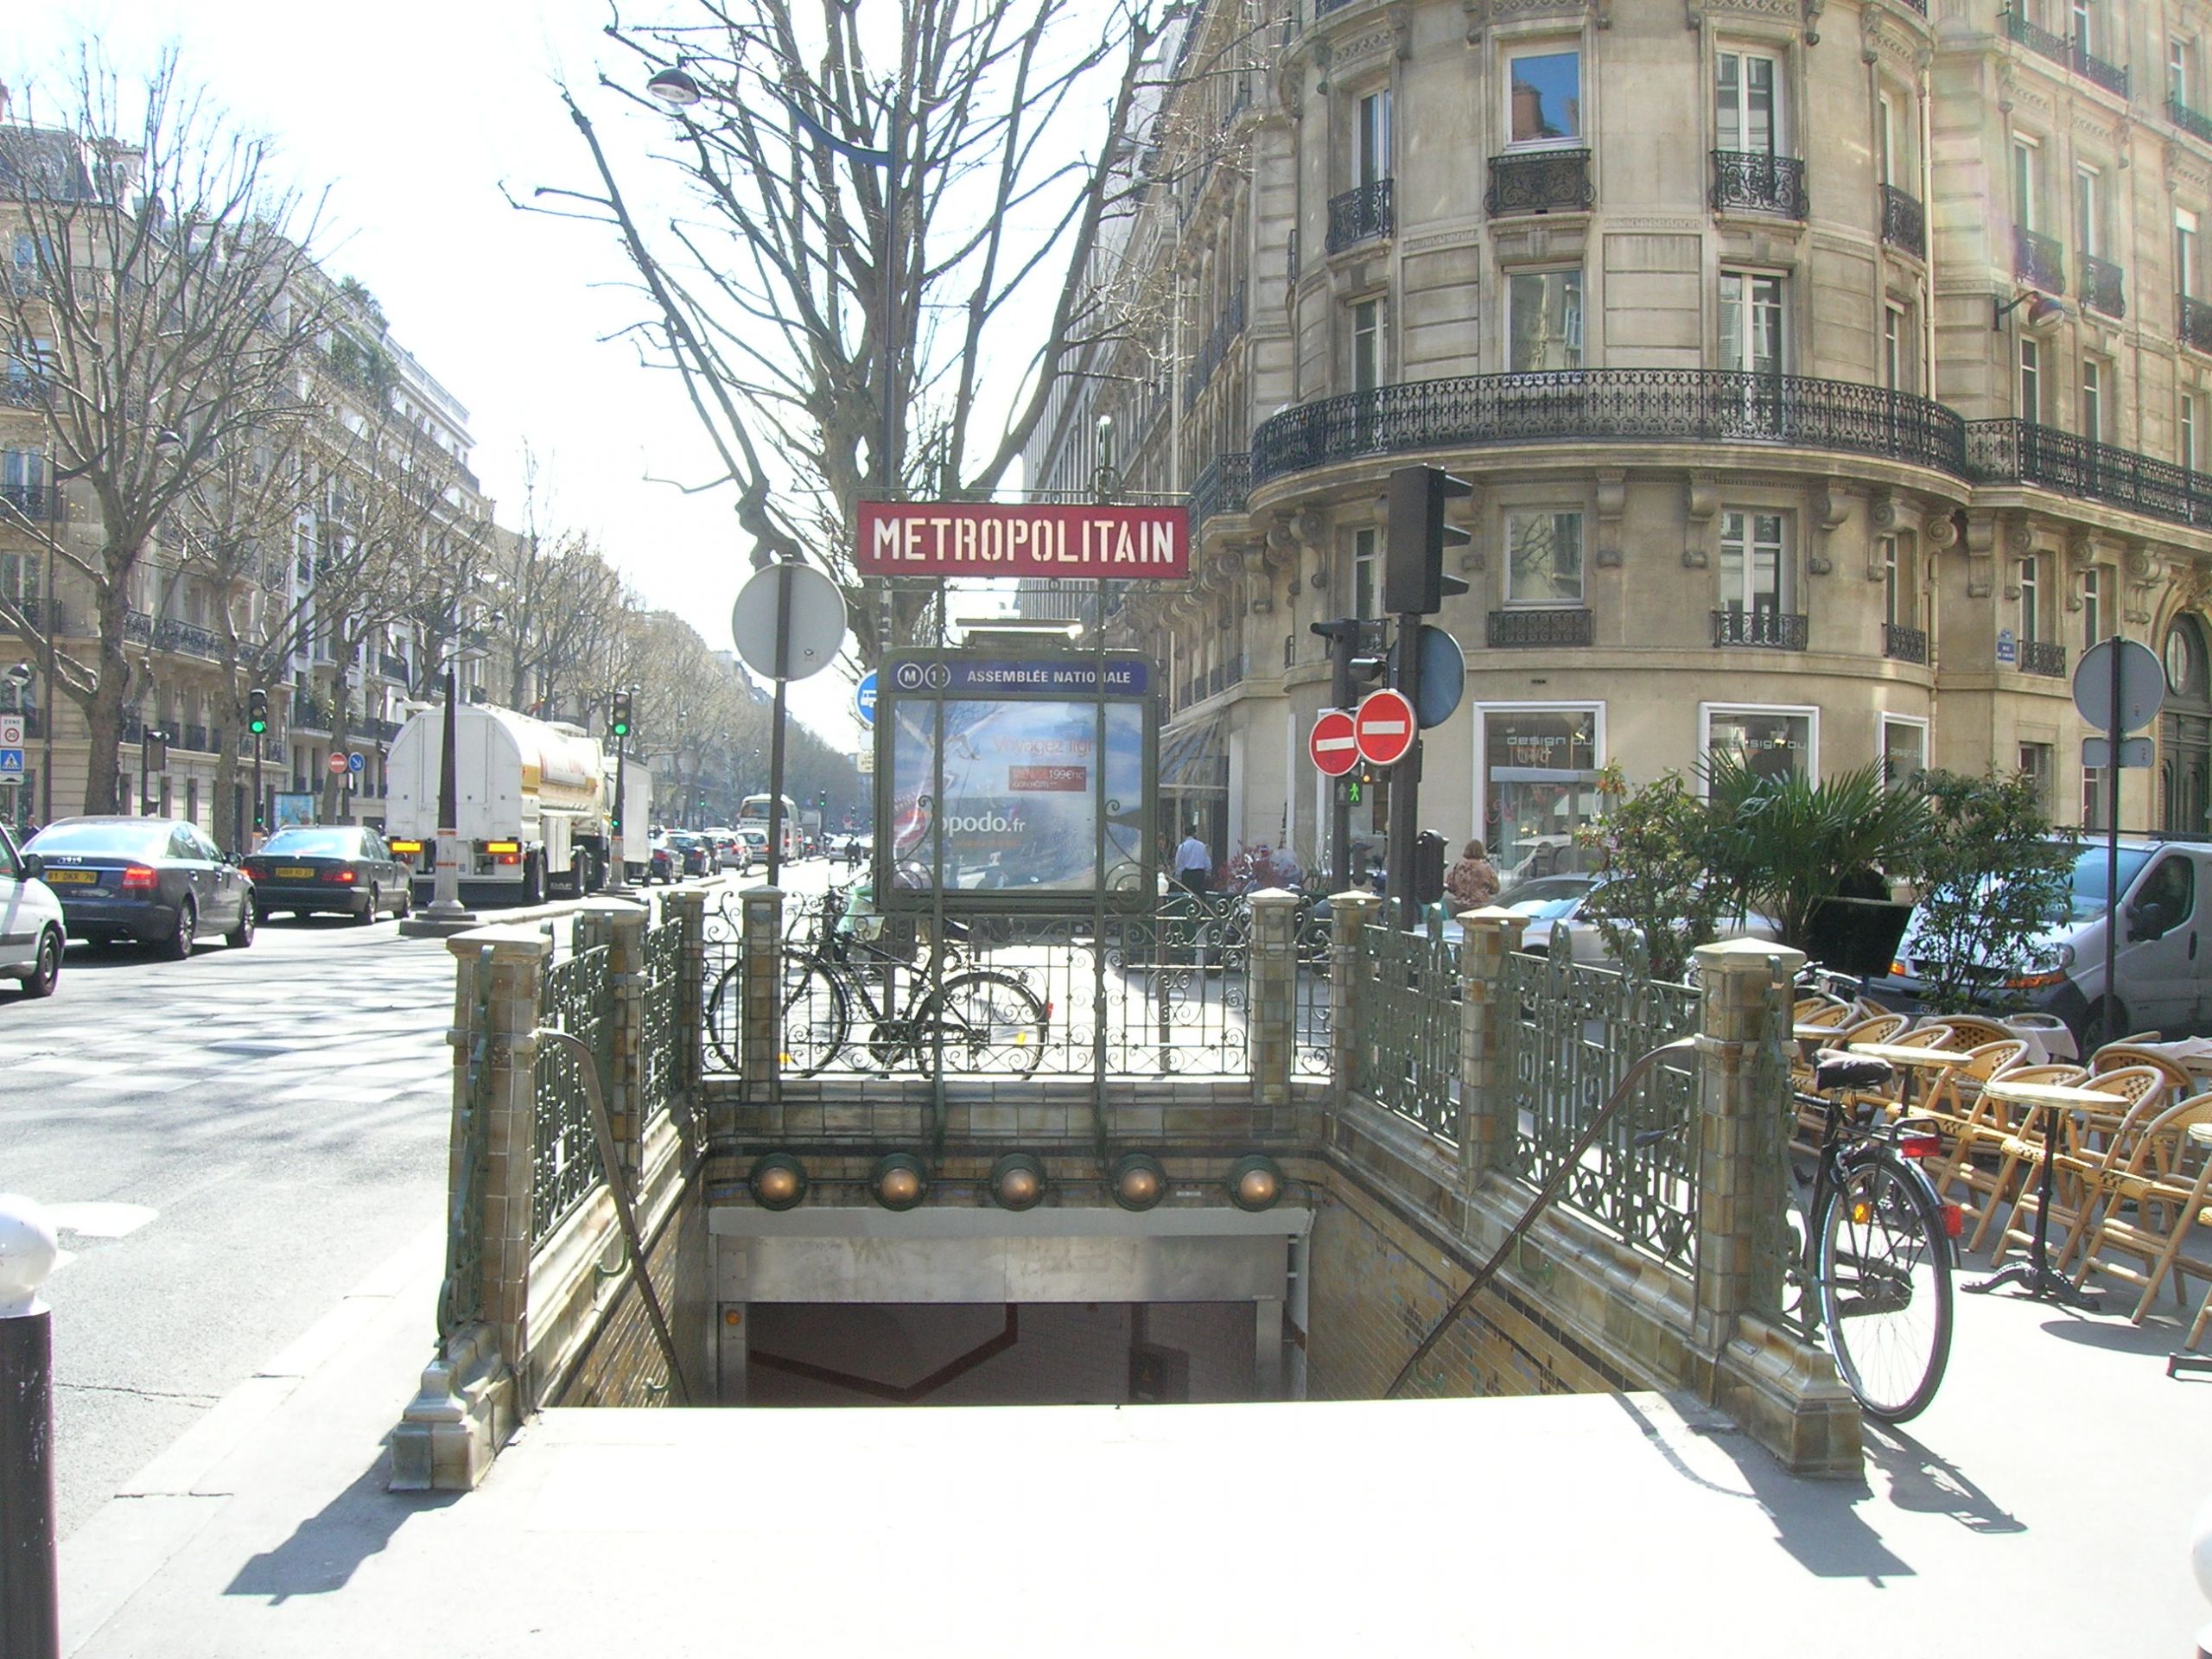 Jardin Des Tuileries Metro Nouveau File Metro 12 Entree assemblee Nationale Jpg Wikimedia Mons